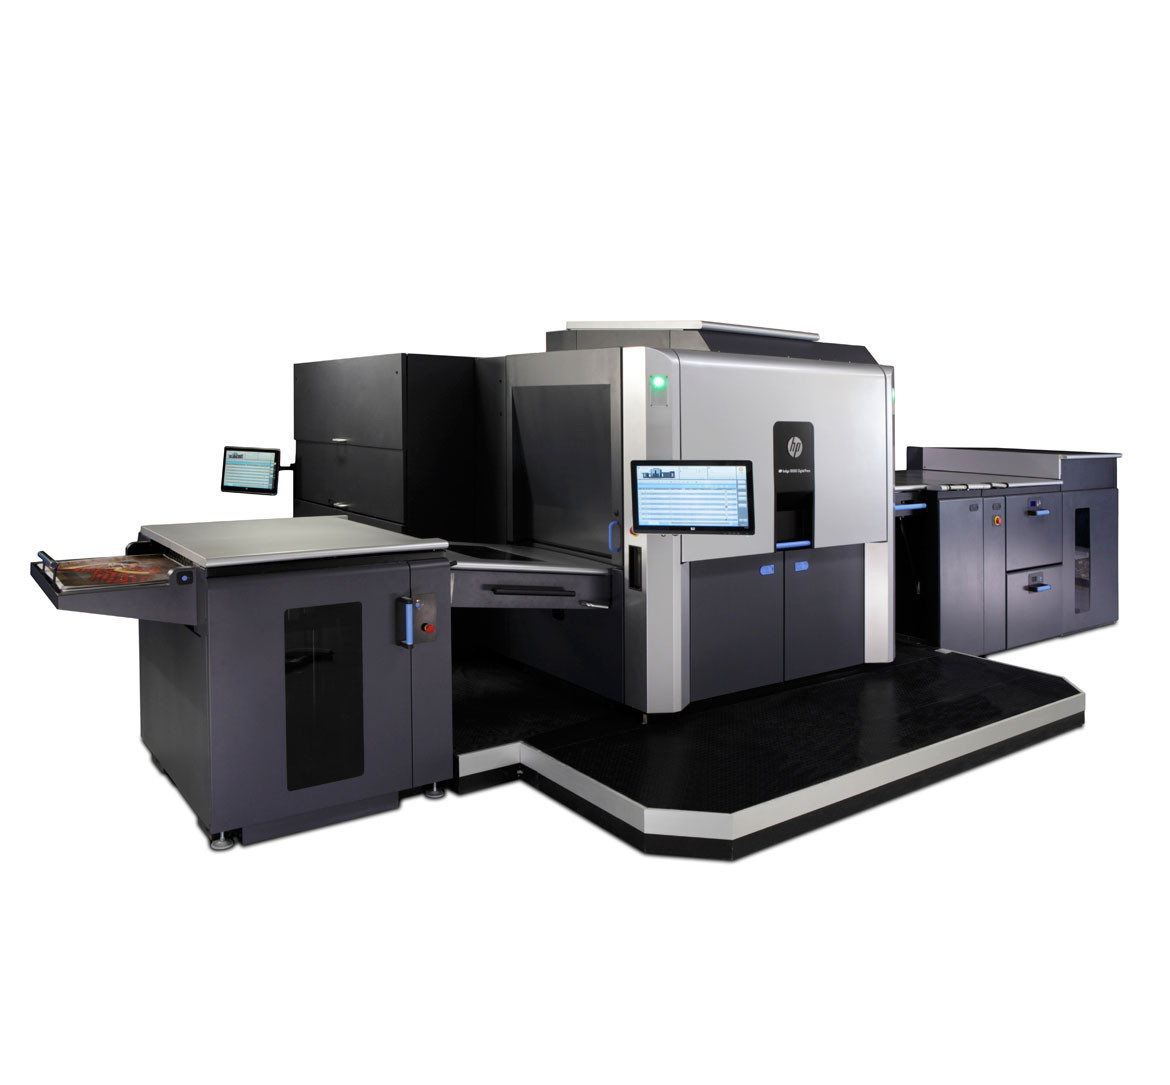 Wide range of possibilities in digital  printing  with HP  